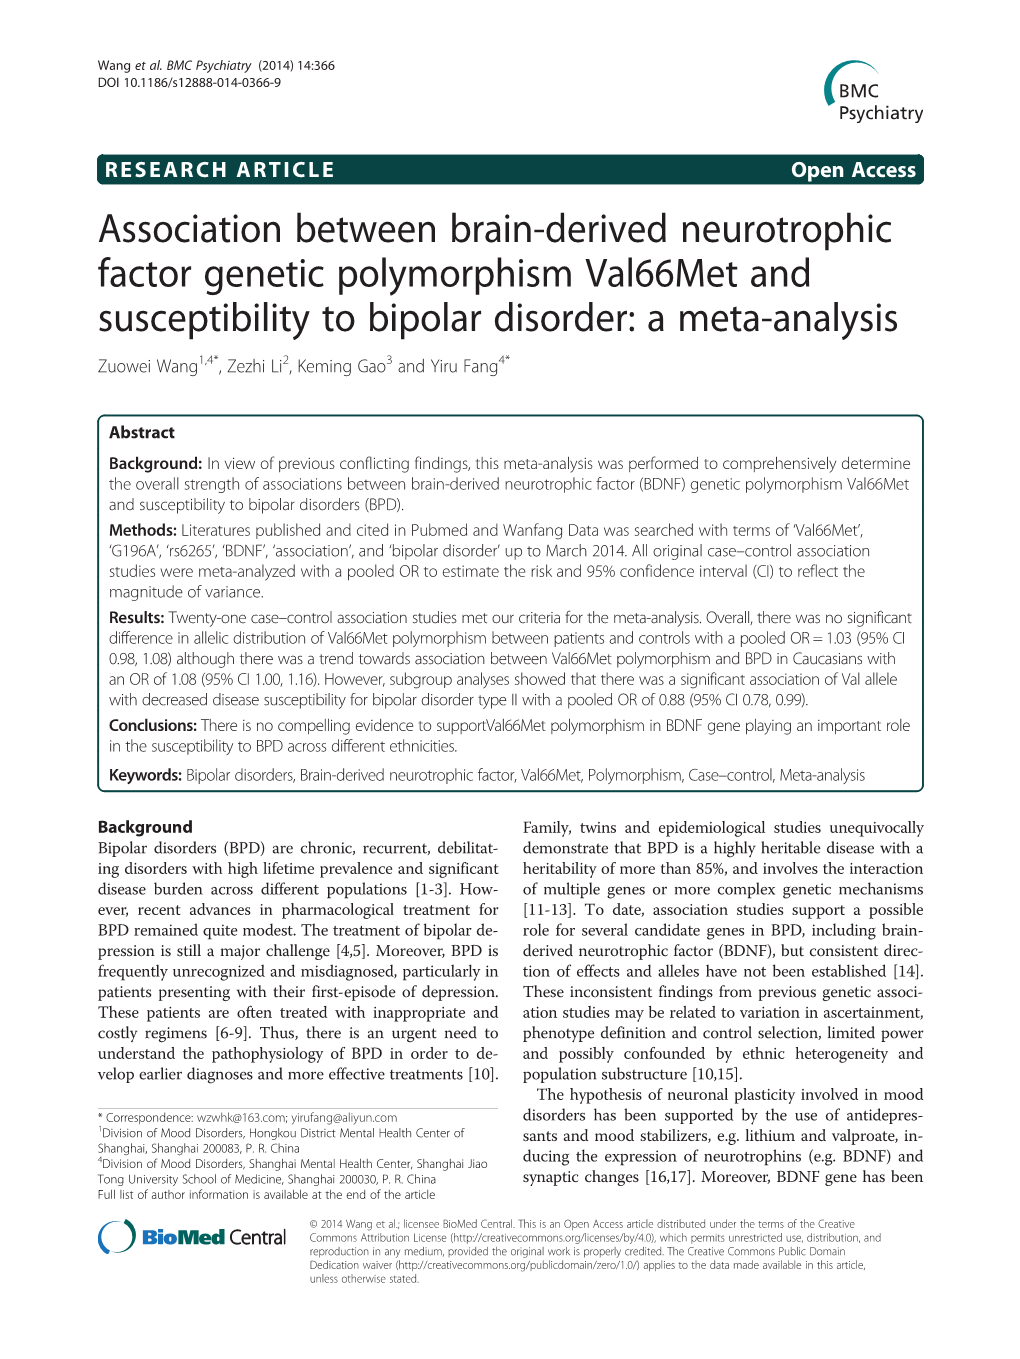 Association Between Brain-Derived Neurotrophic Factor Genetic